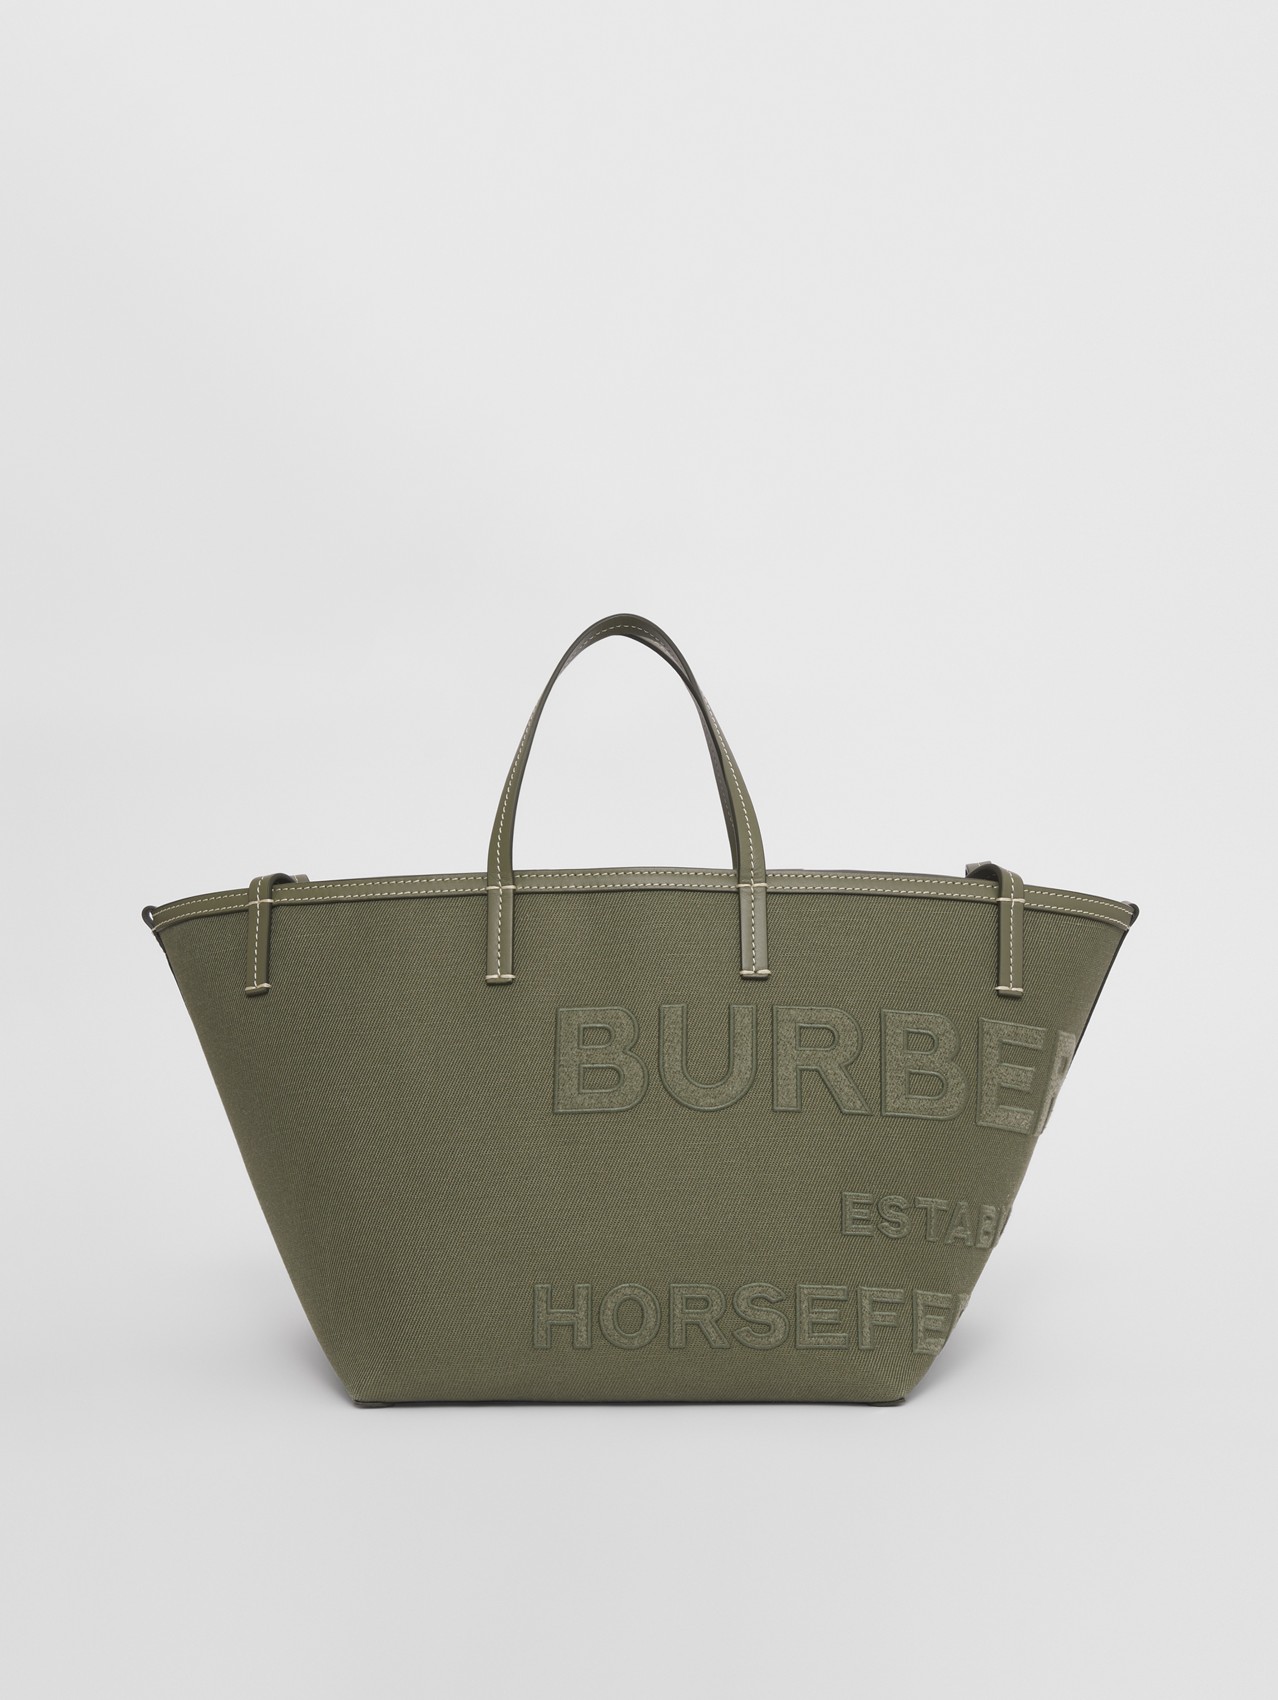 Strandtasche im Miniformat mit Horseferry-Schriftzug (Dunkles Farngrün)